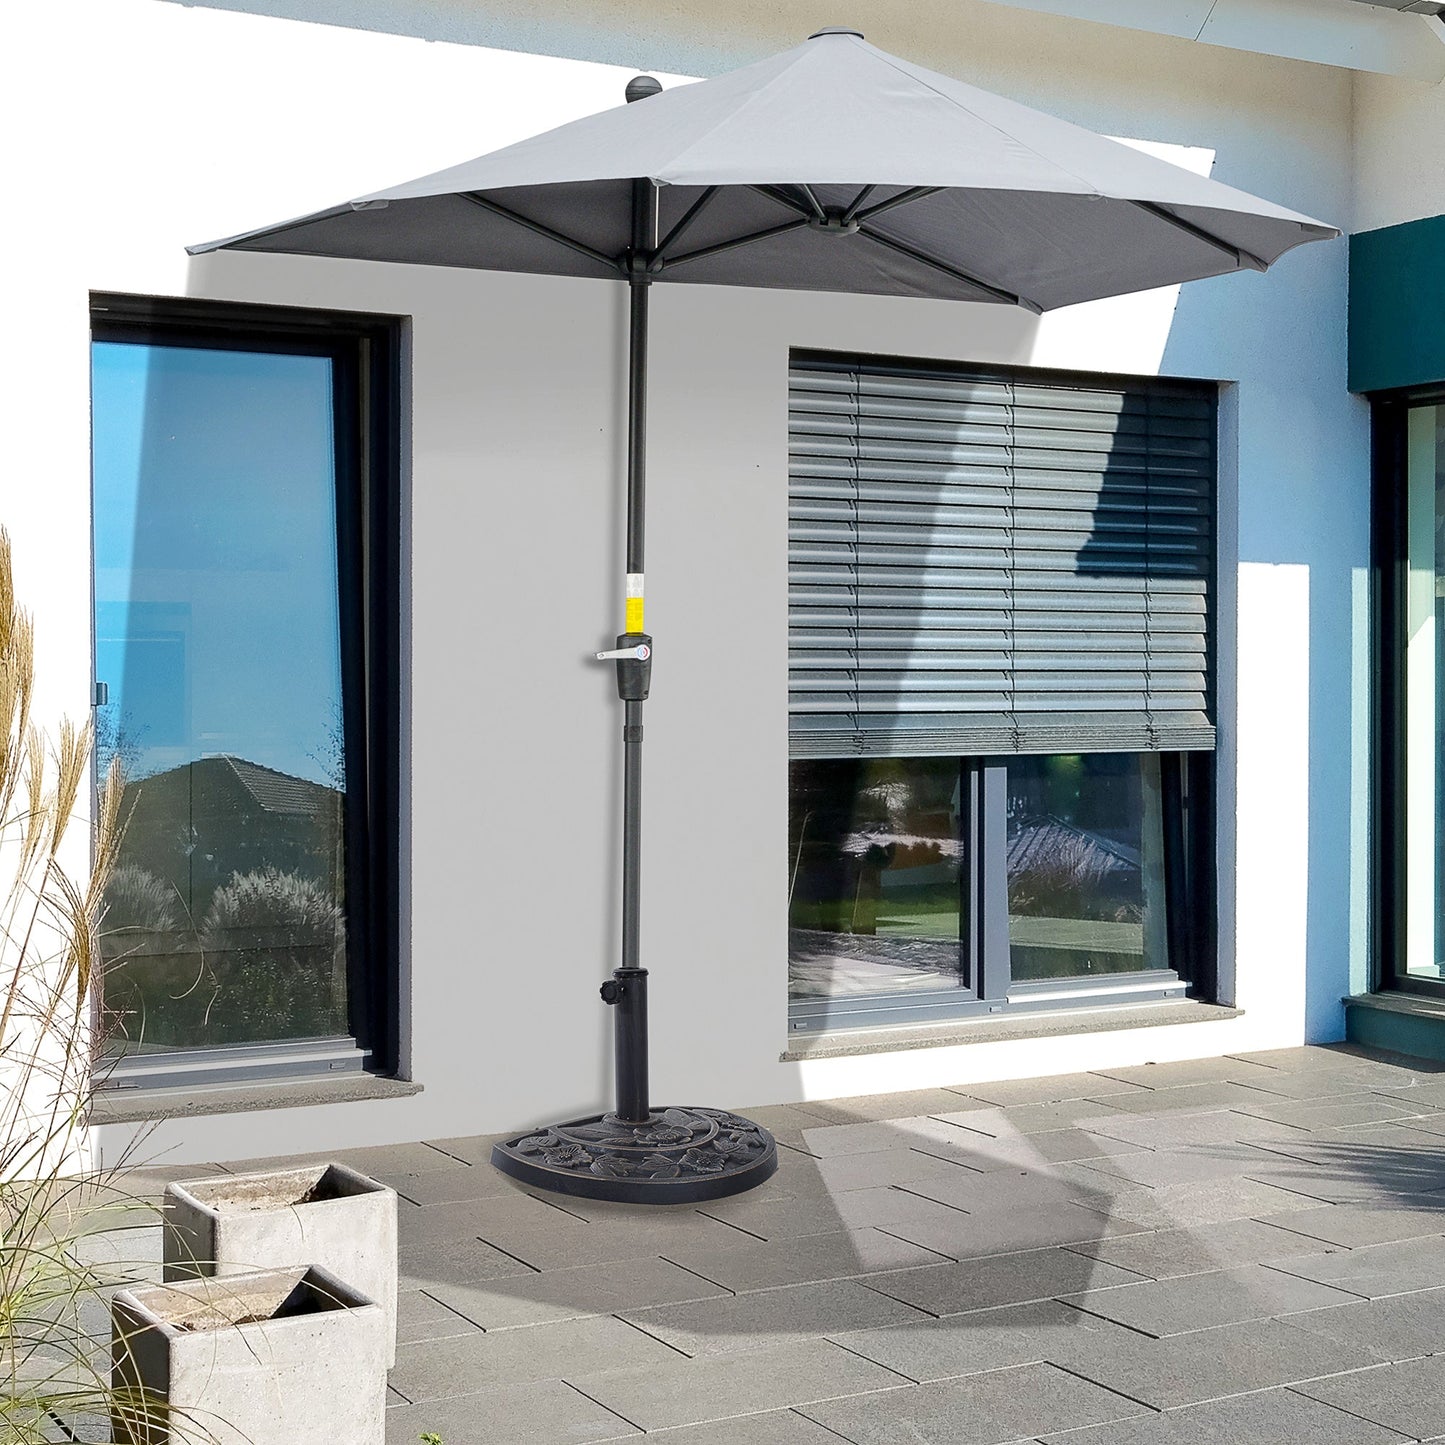 Outdoor and Garden-20lbs Half Round Patio Umbrella Base Outdoor Decorative Resin Parasol Stand Holder for Φ1.5", Φ1.9" Pole, Lawn, Deck, Garden Use, Bronze - Outdoor Style Company